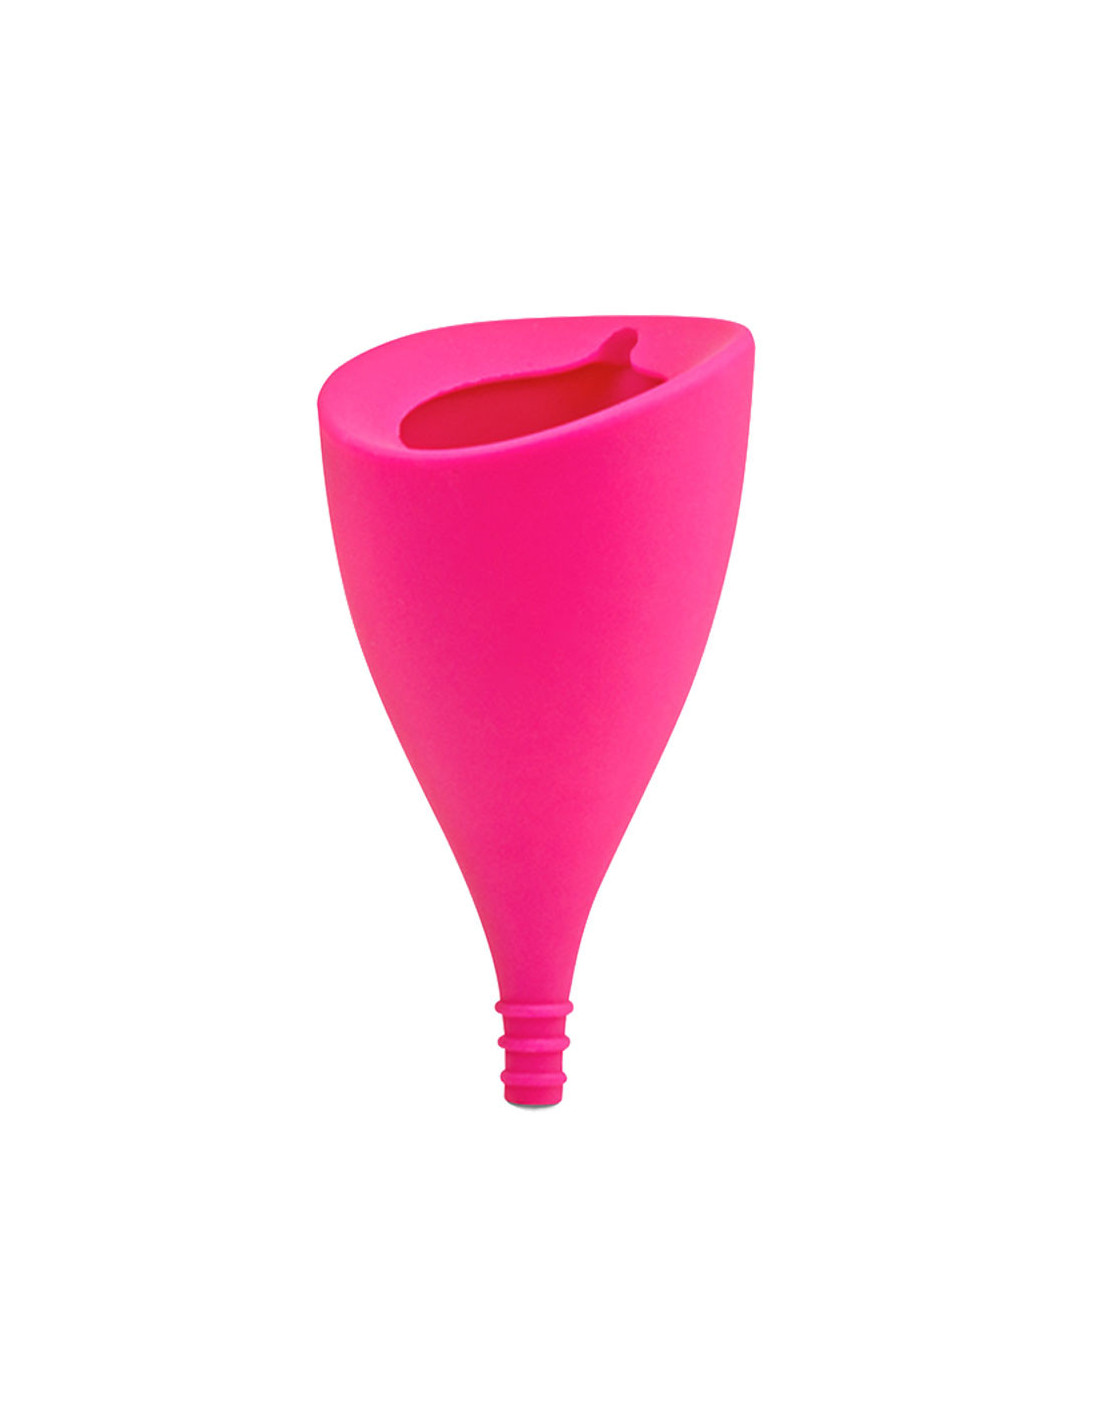 Intimina Coupe menstruelle Lily Cup zlOnA4Un